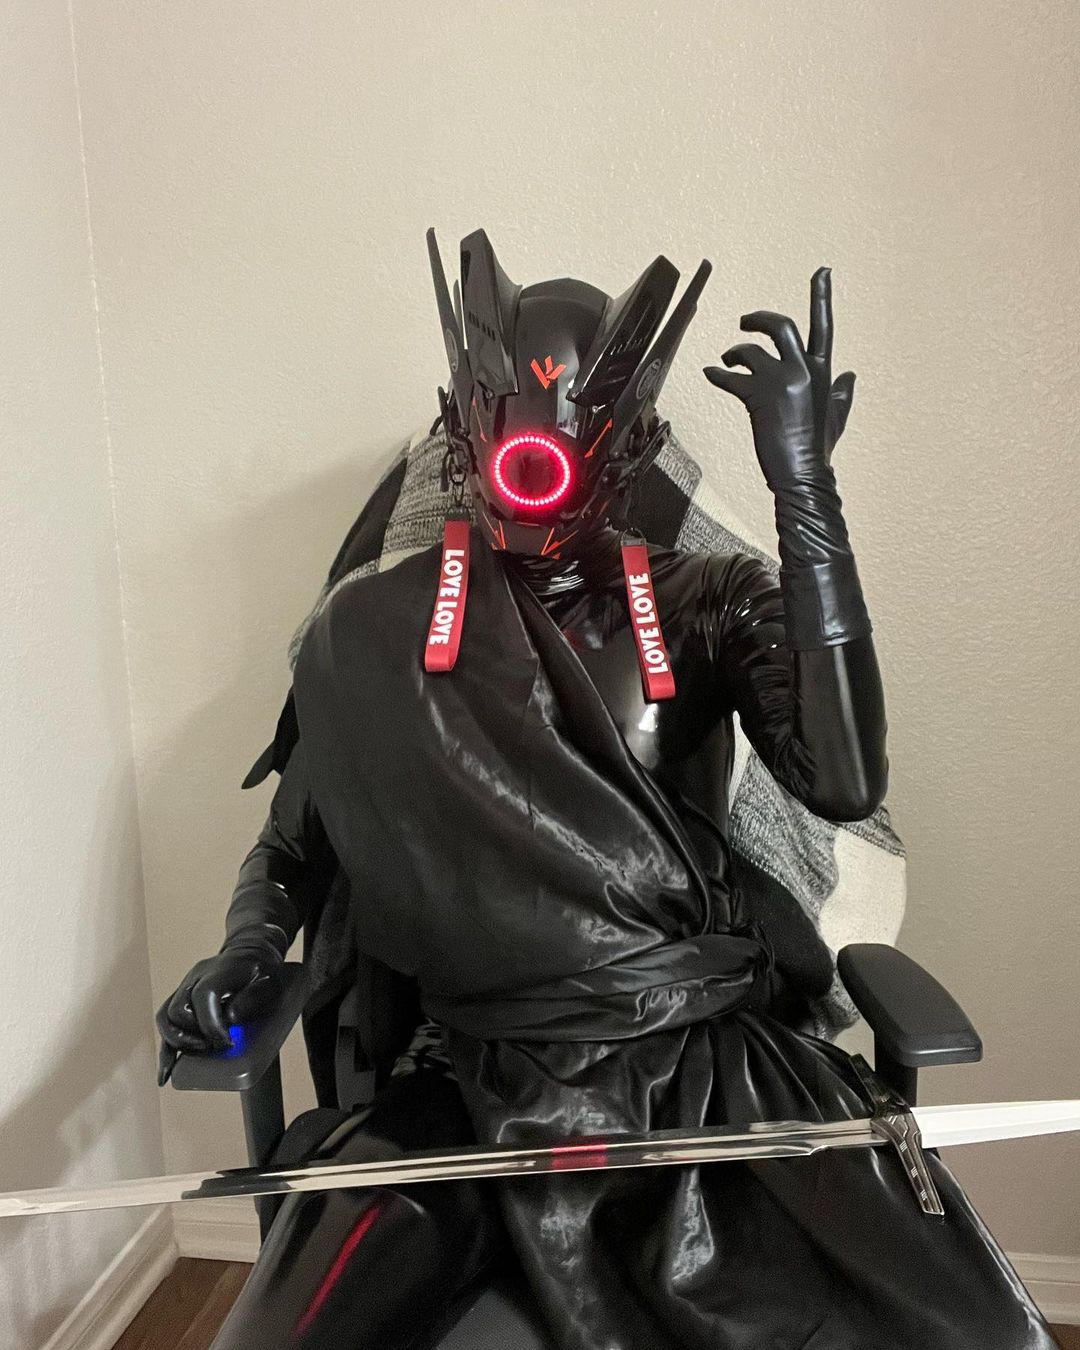 To Cyberpunk handmade LED mask